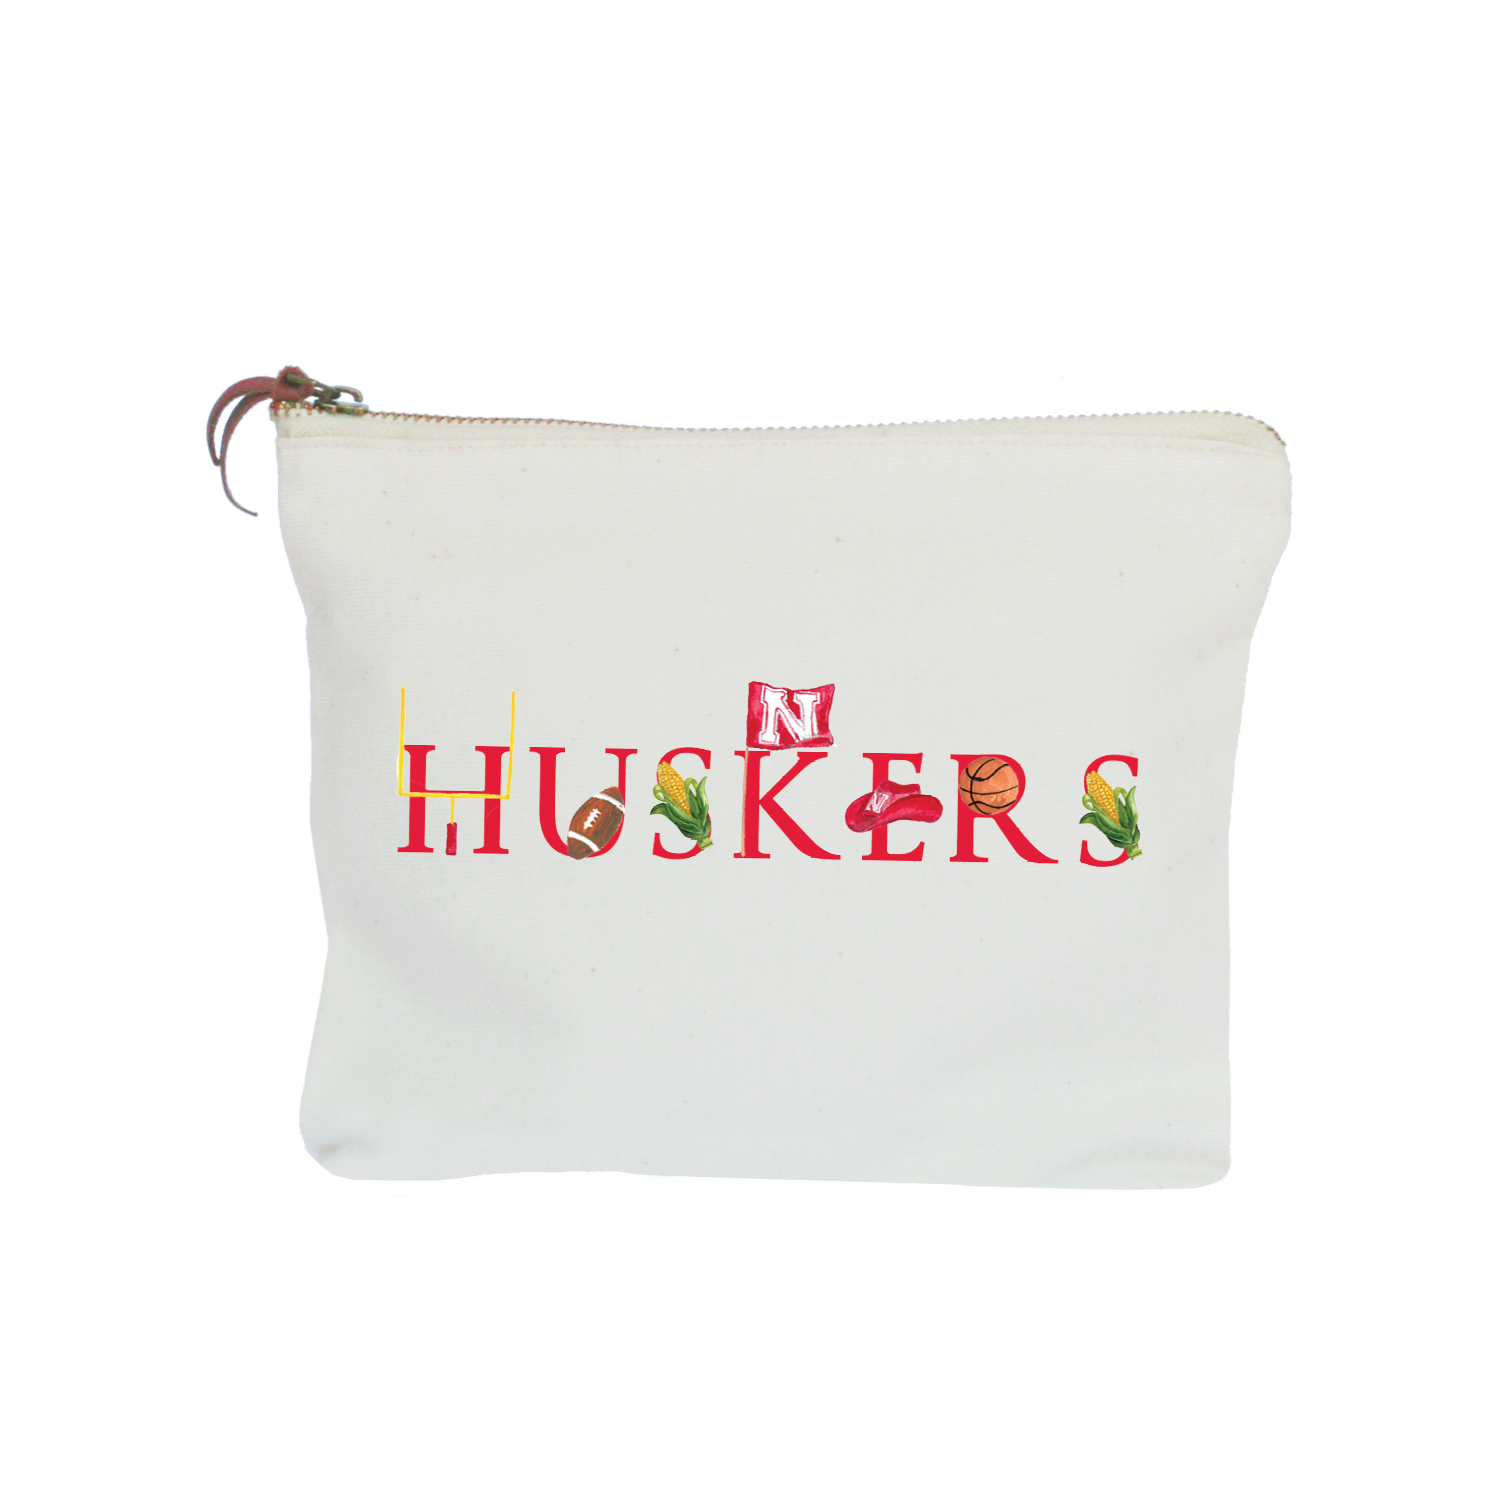 huskers zipper pouch